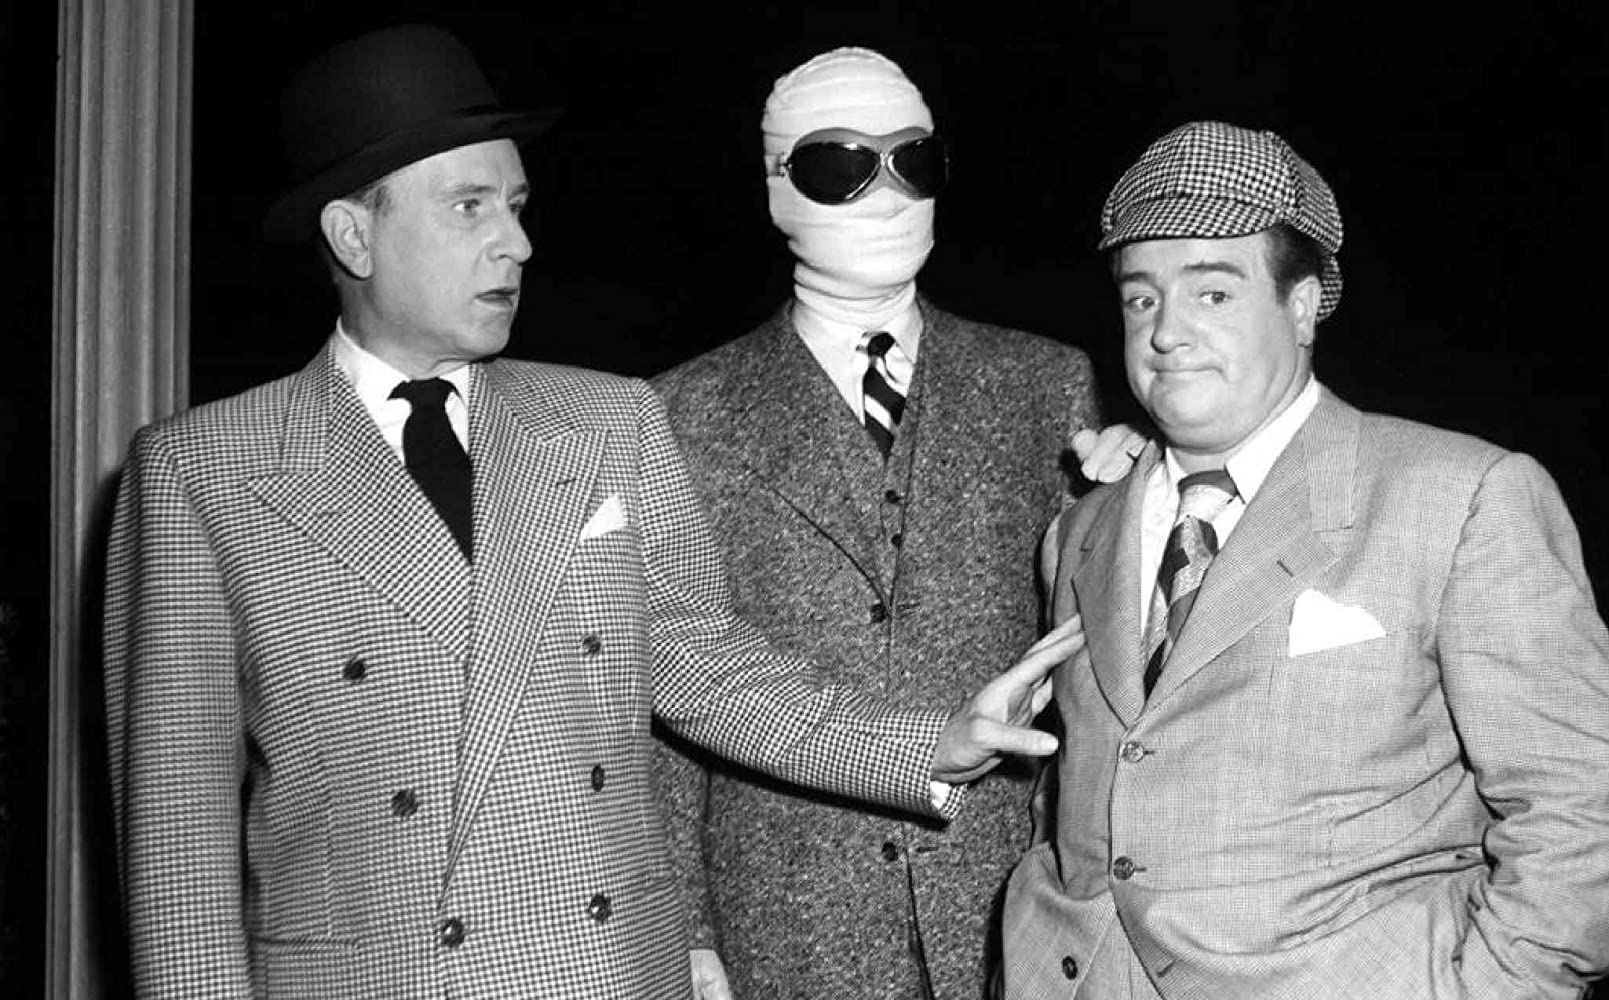 Abbott & Costello Meet the Invisible Man (1951)